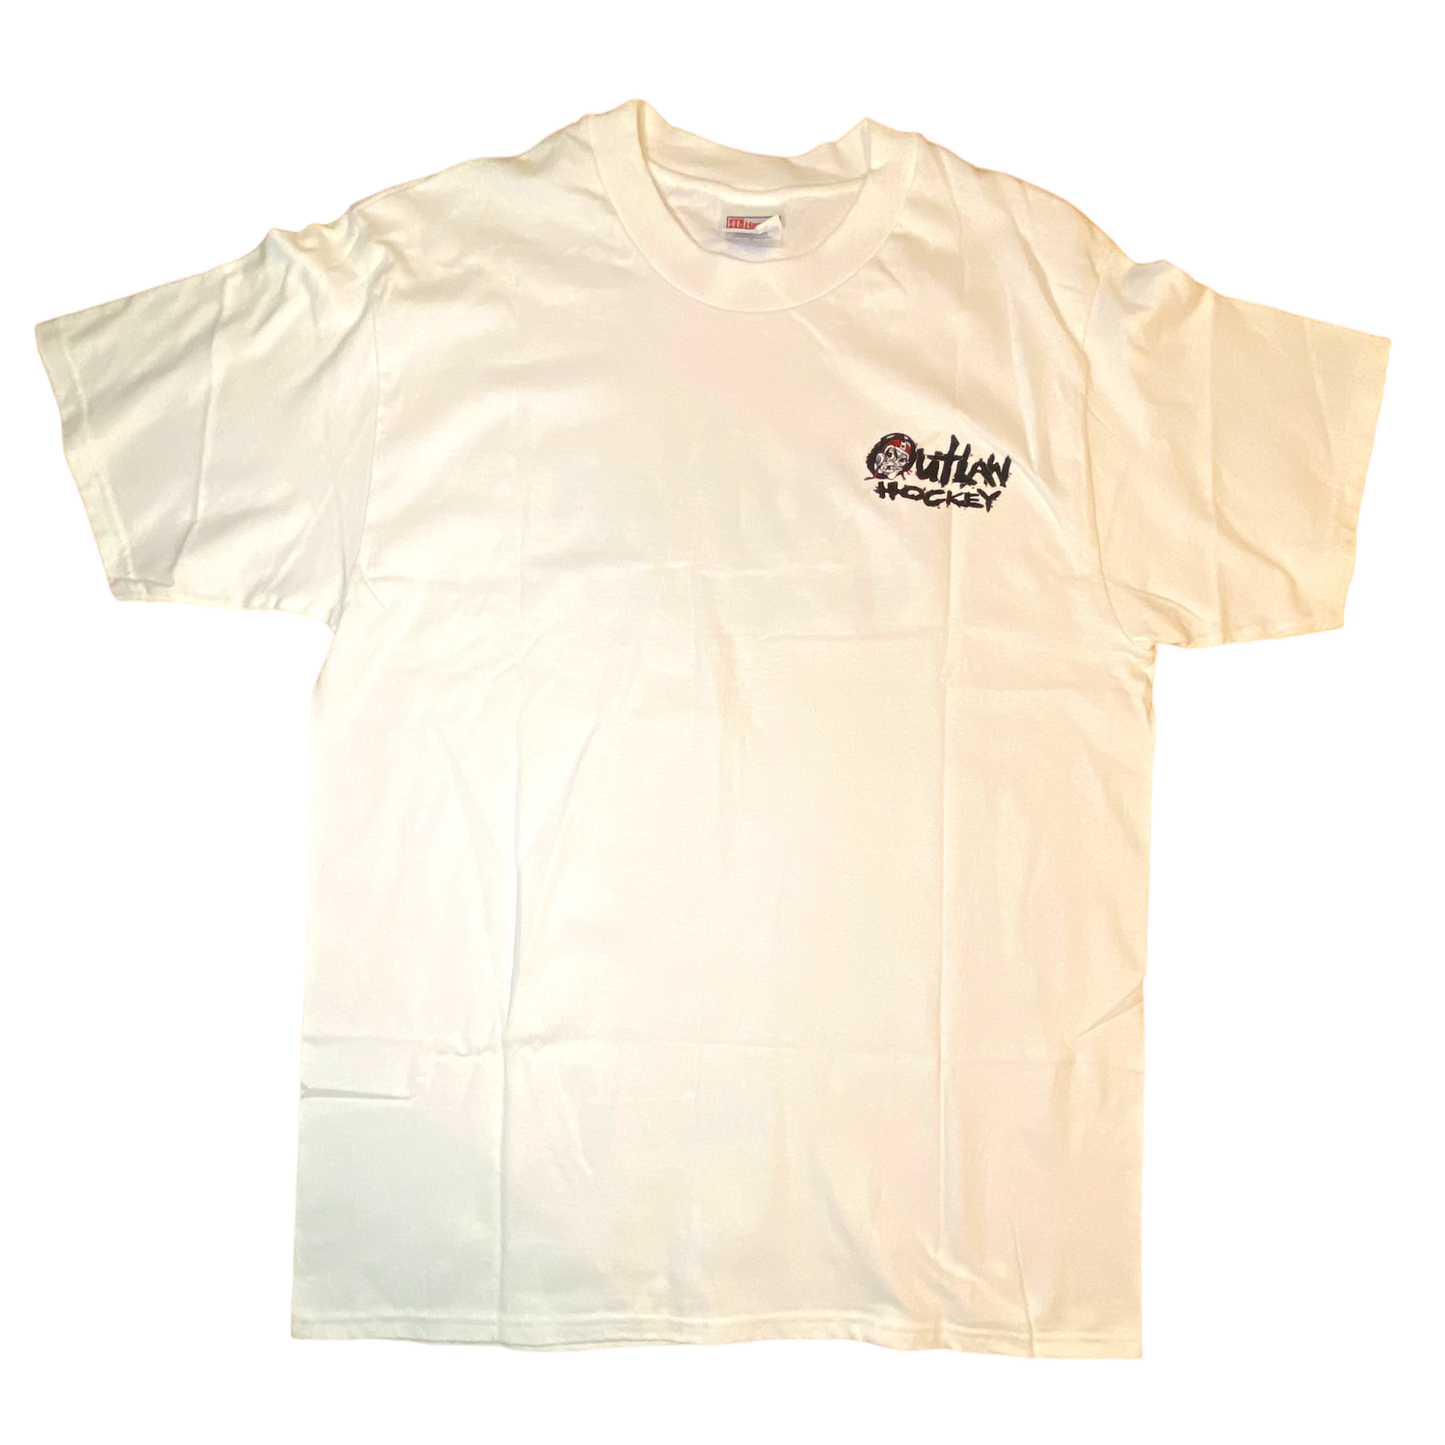 Hanes - Outlaw Hockey Vintage Y2K T-Shirt